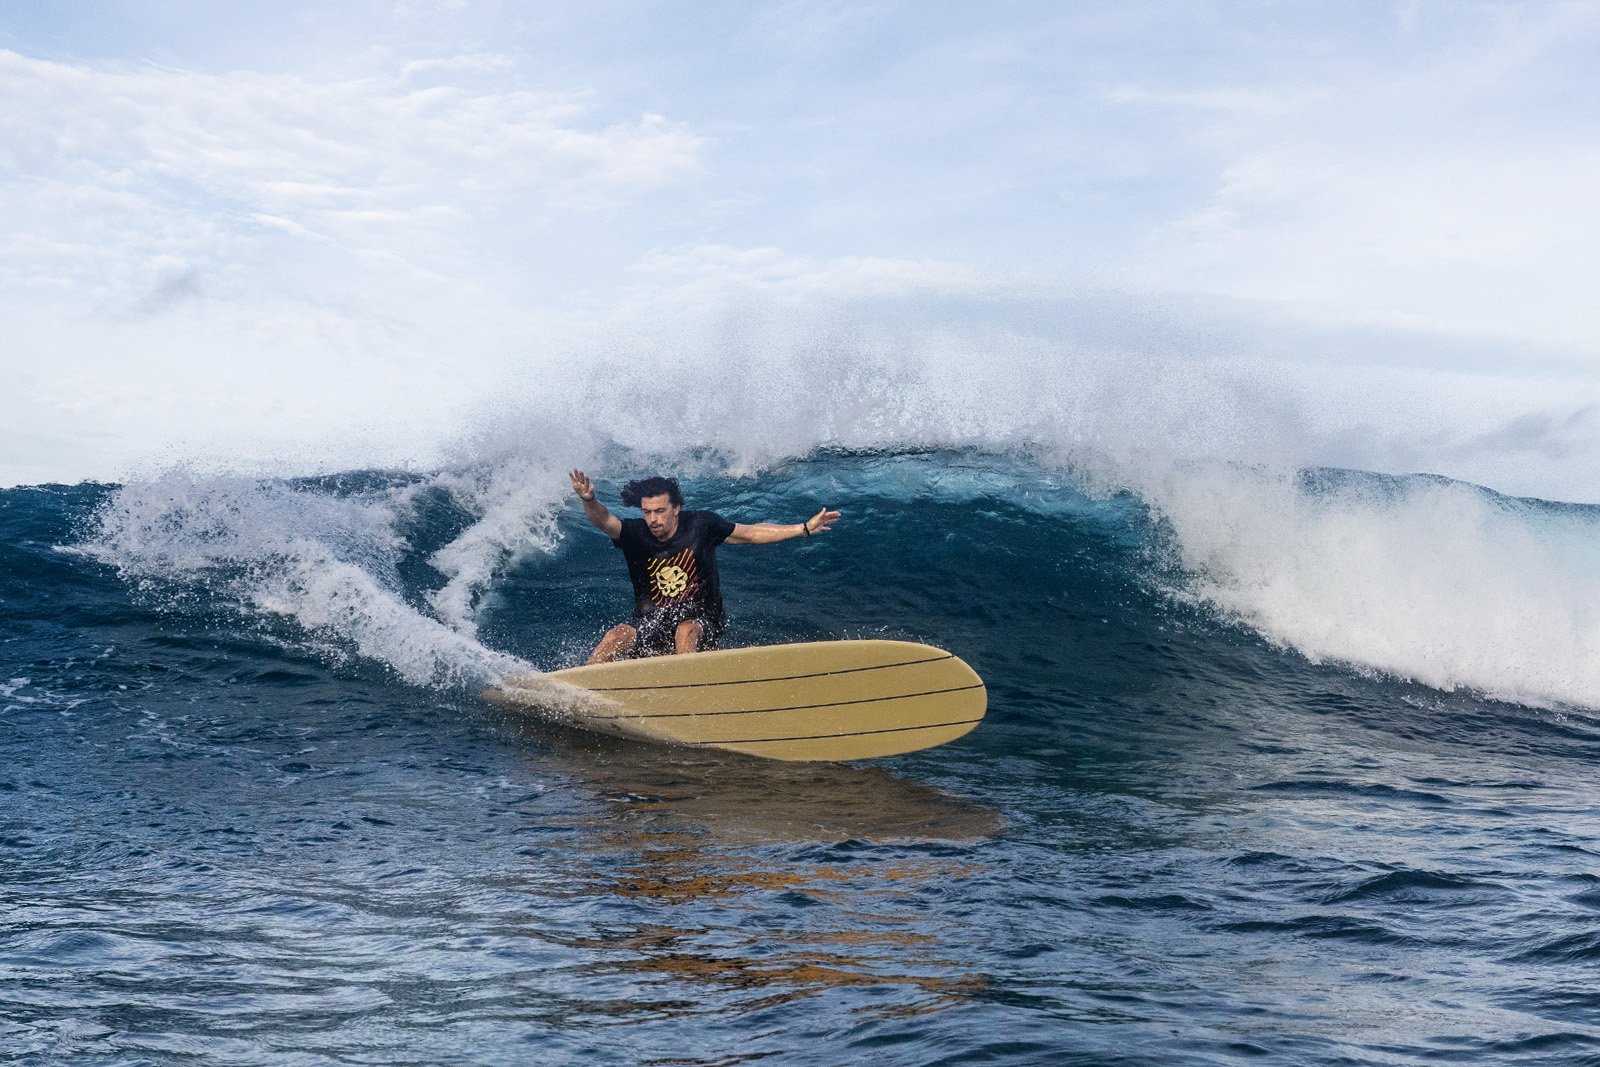 Surfer on Delpero Longboard Classic during cutback